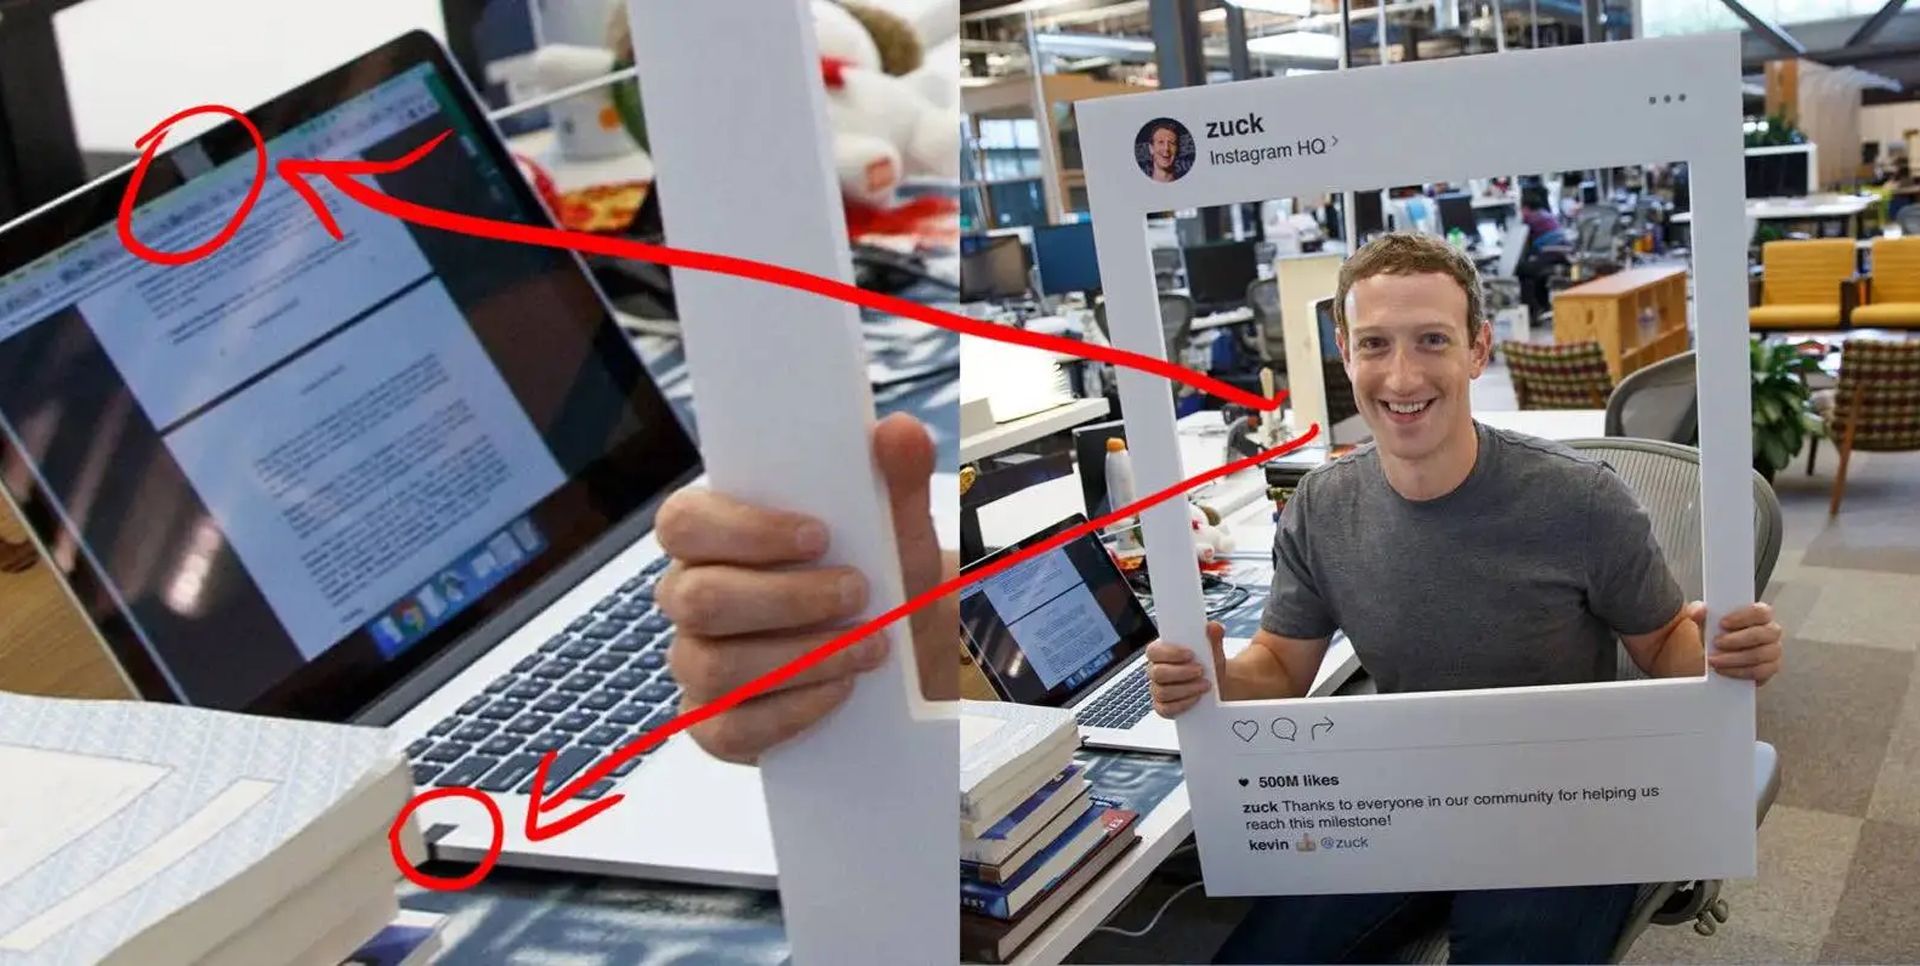 پوشاندن وب کم و میکروفون مک بوک اپل توسط مارک زاکربرگ / Mark Zuckerberg